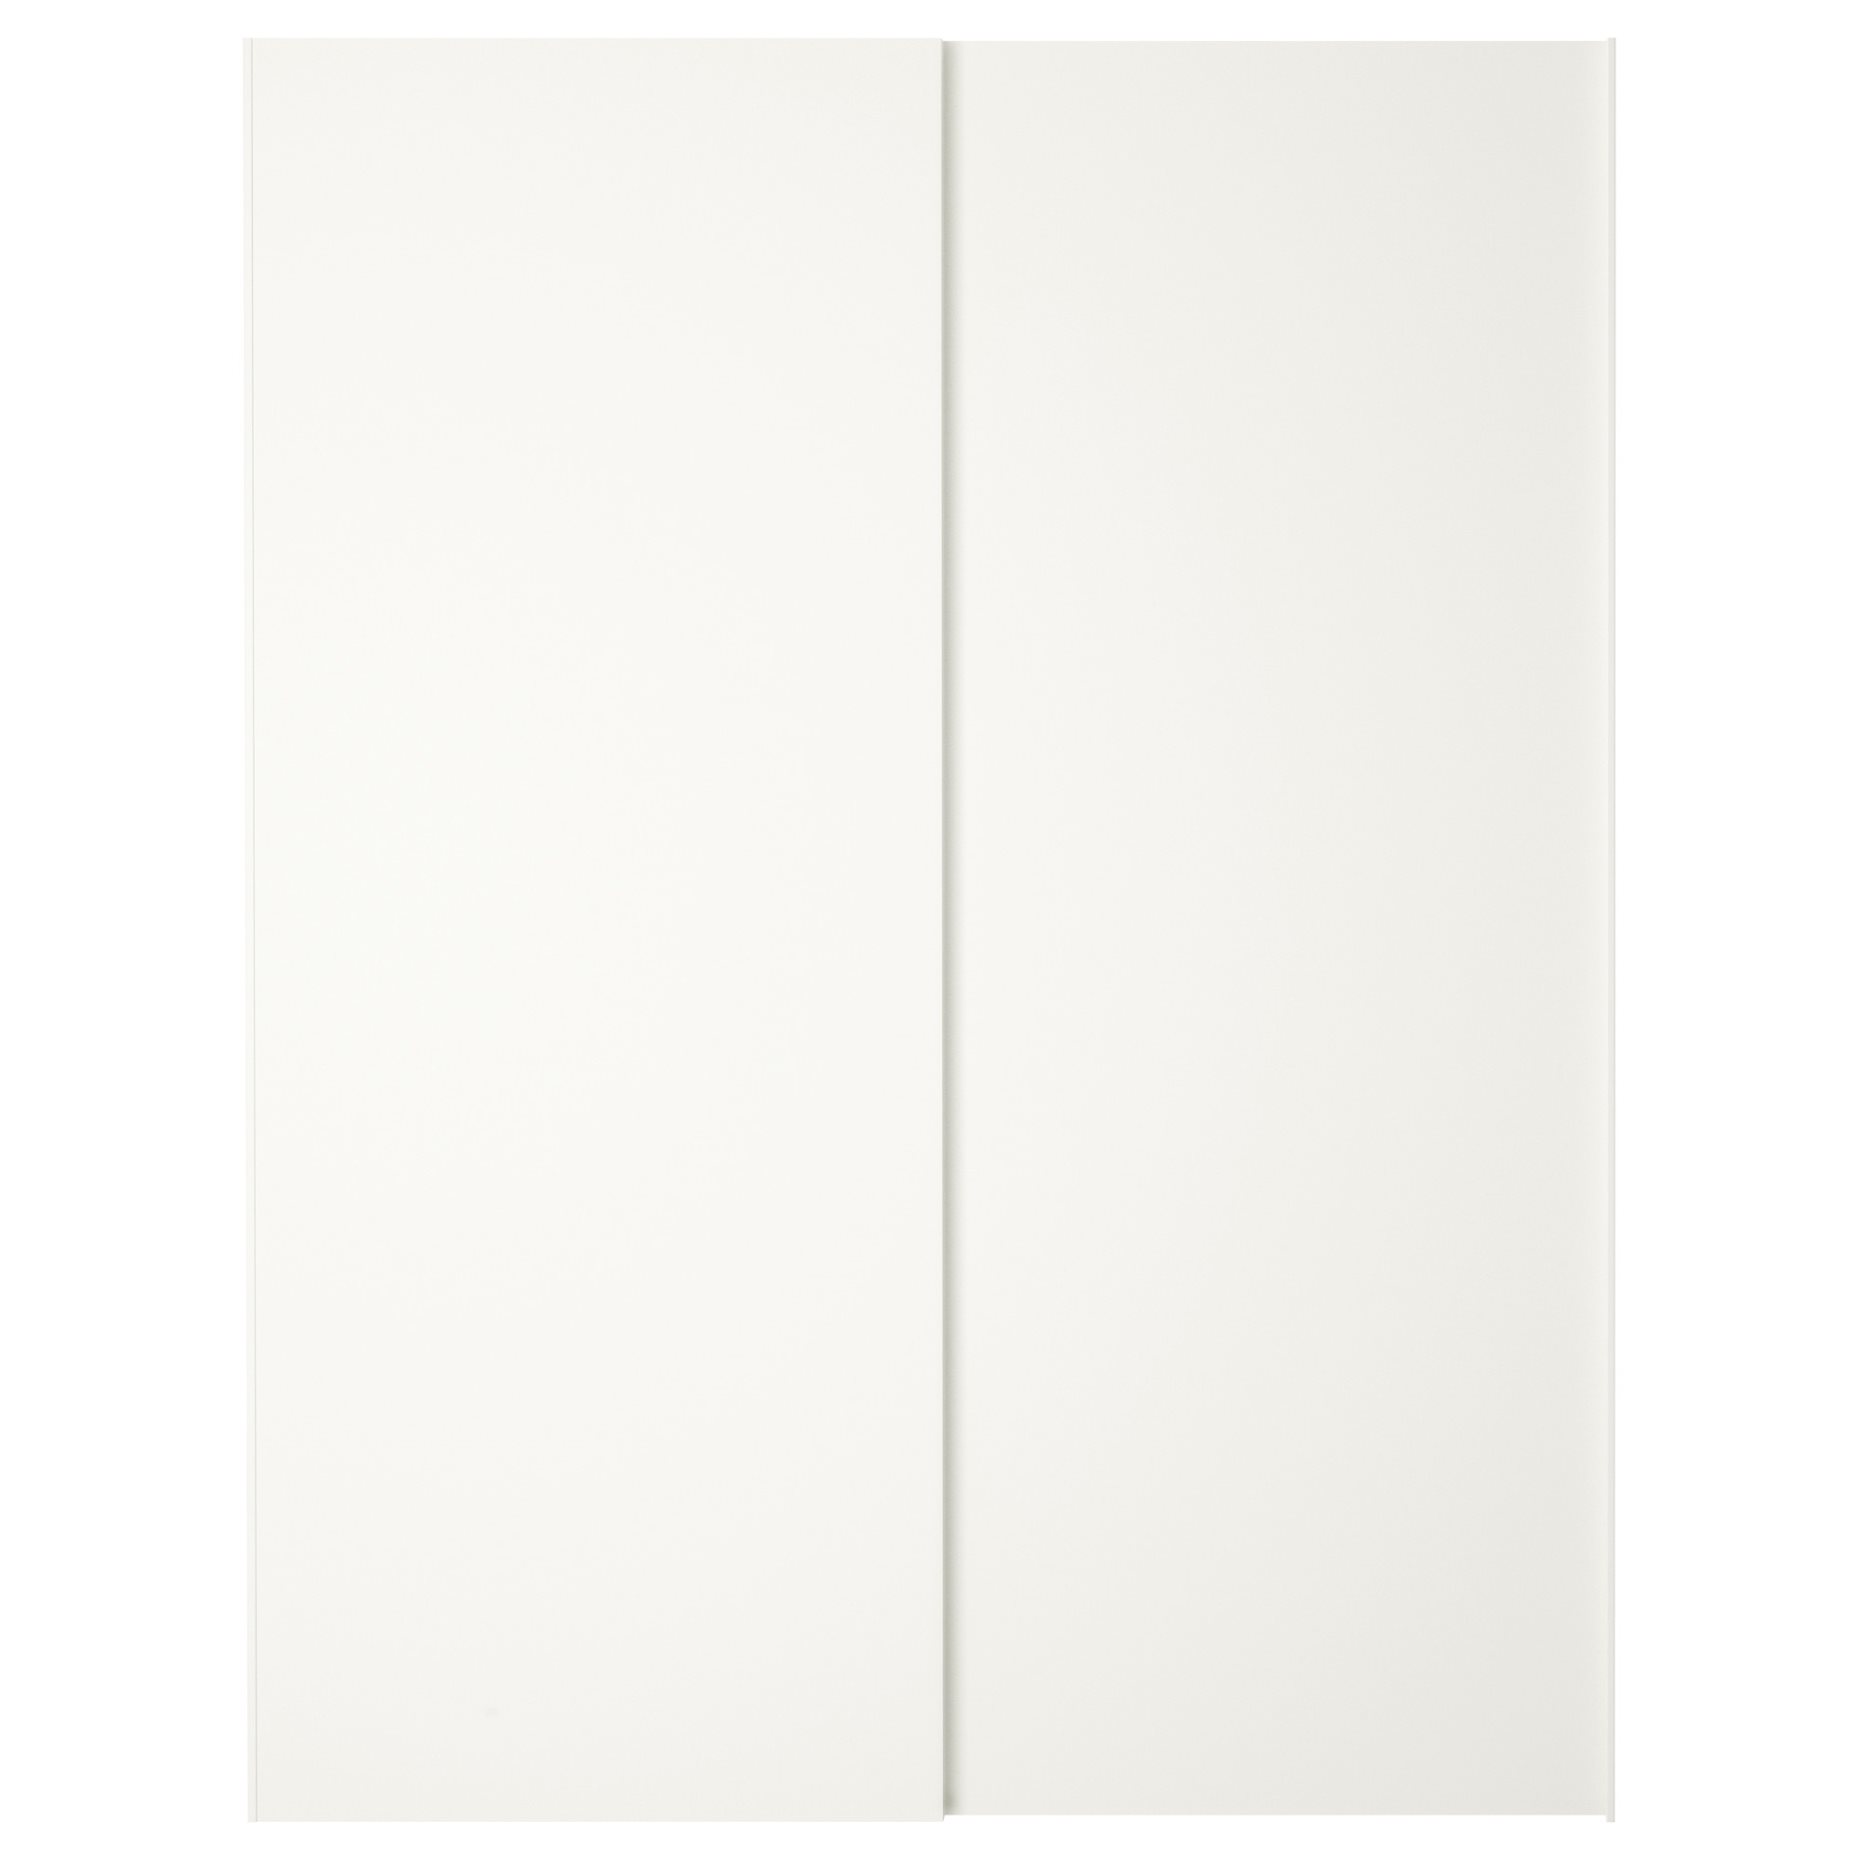 HASVIK, pair of sliding doors, 150x201 cm, 105.215.37